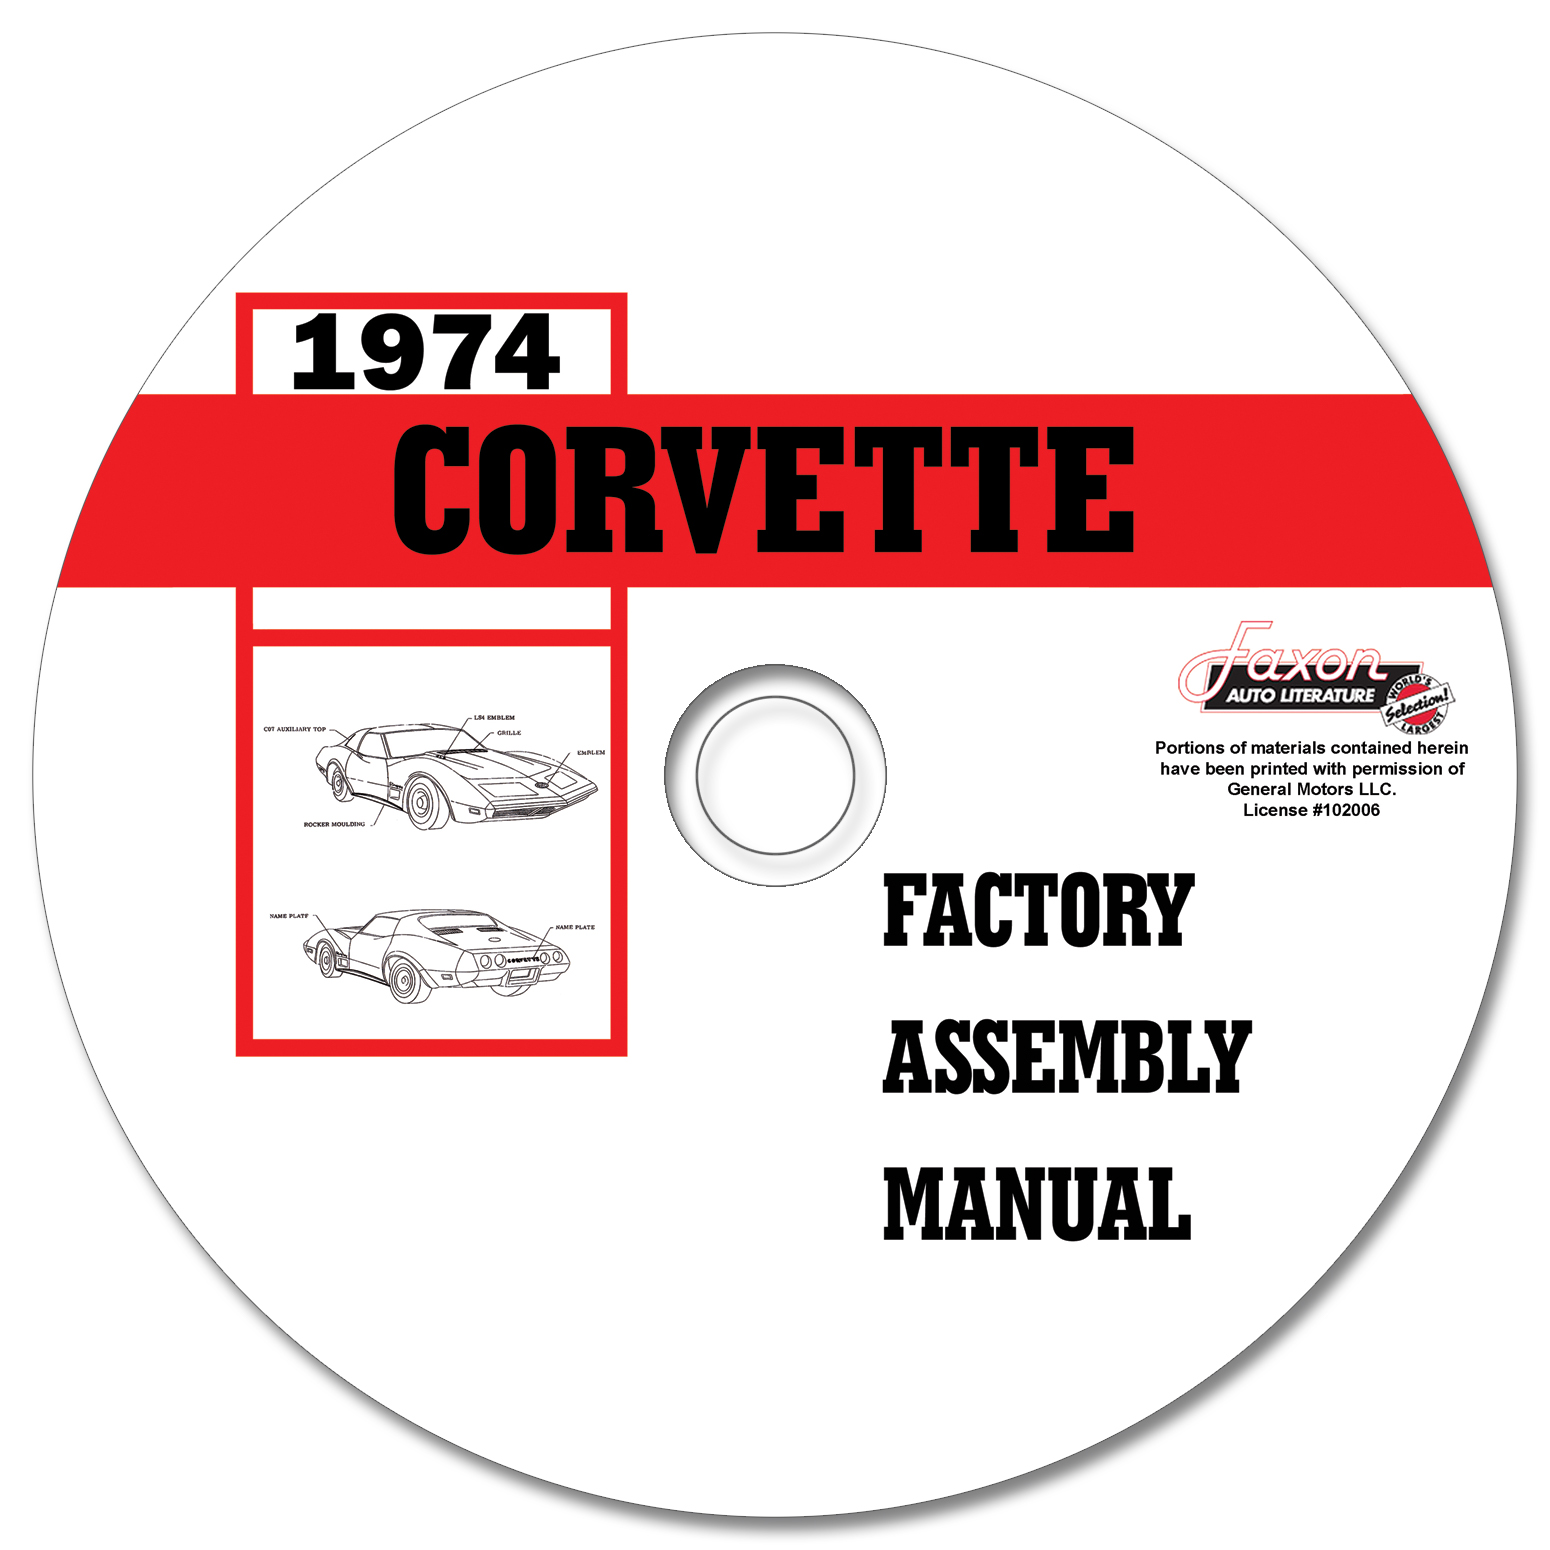 1974 Corvette Factory Assembly Manual CD-ROM